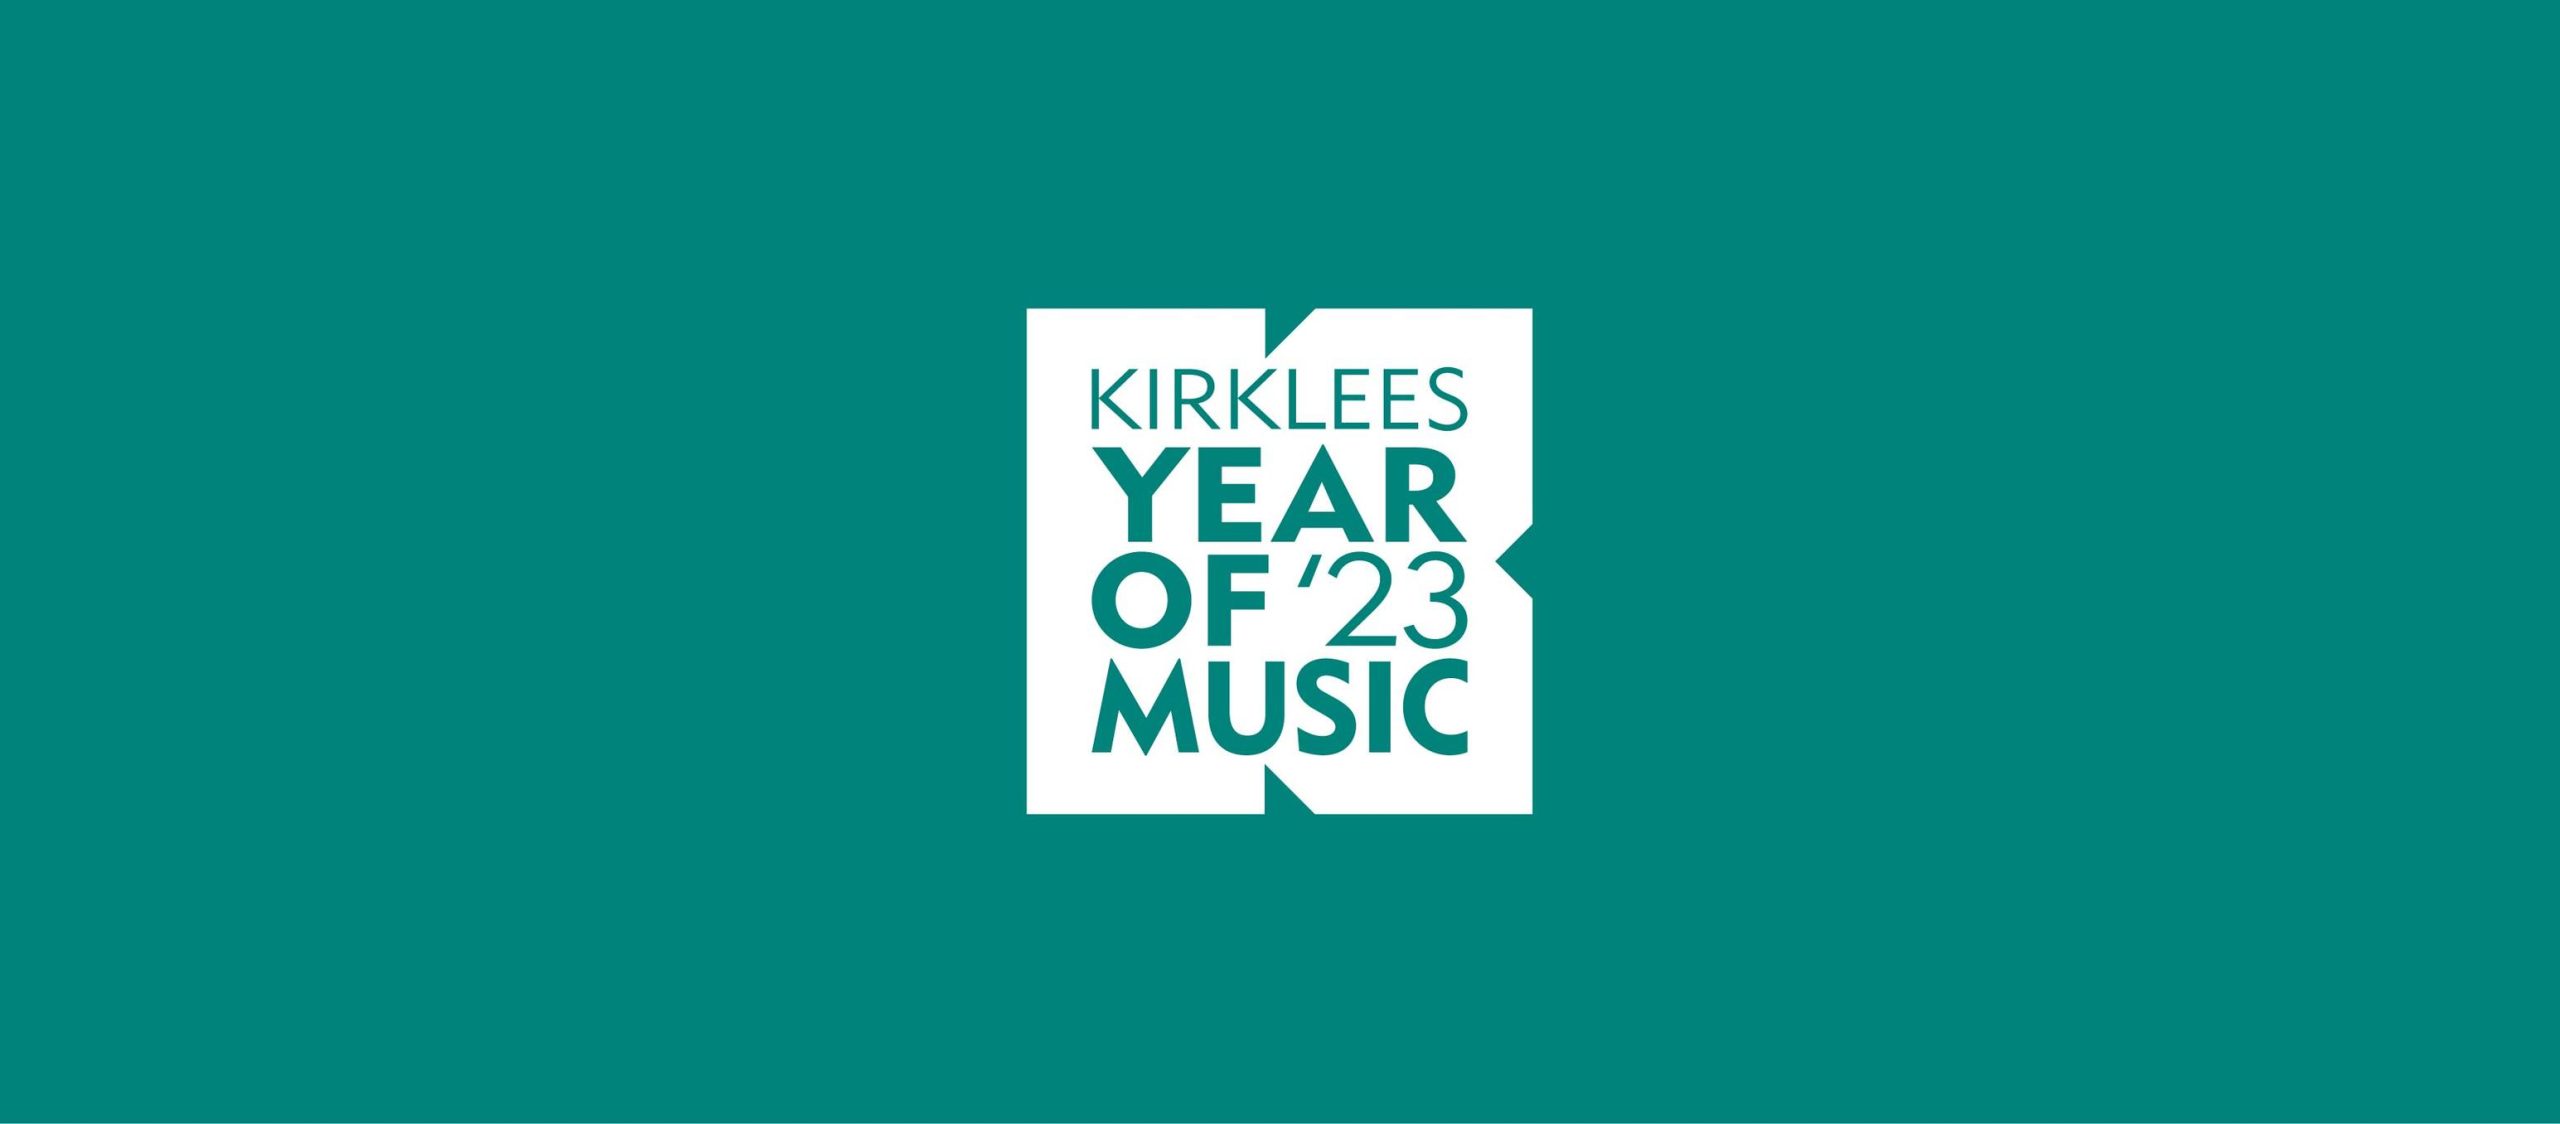 Kirklees Year of Music 2023 logo